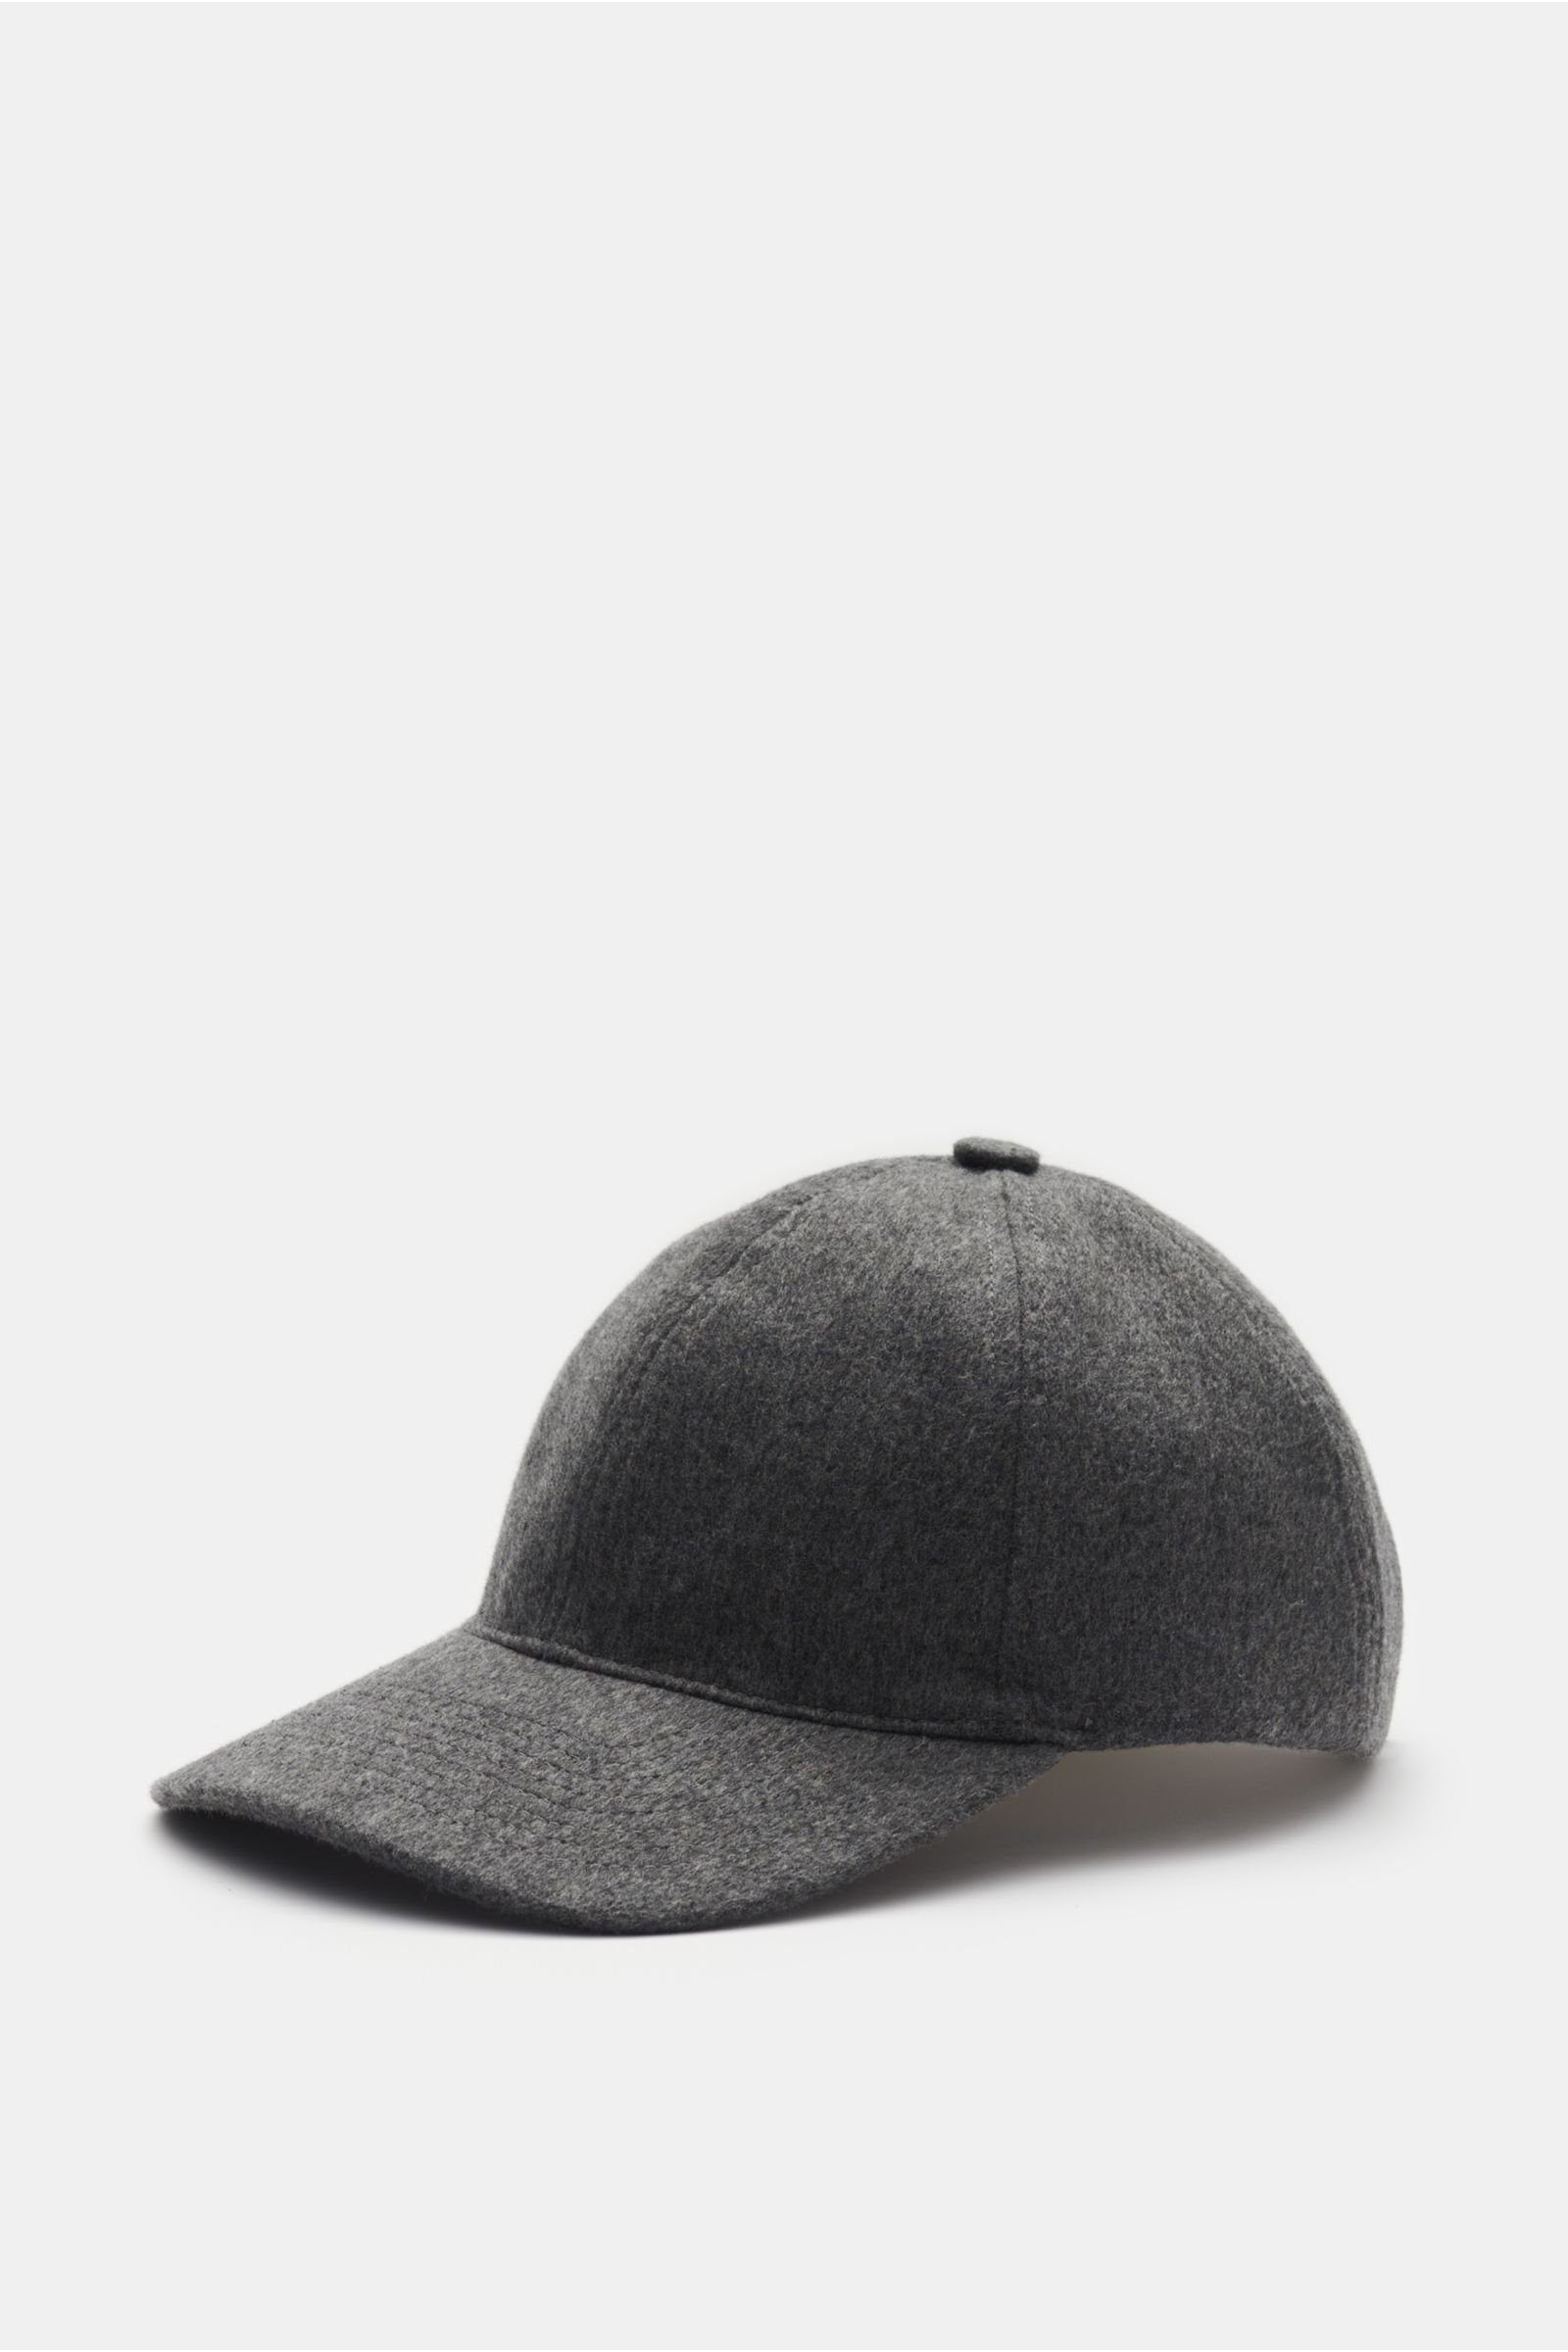 Cashmere baseball cap dark grey